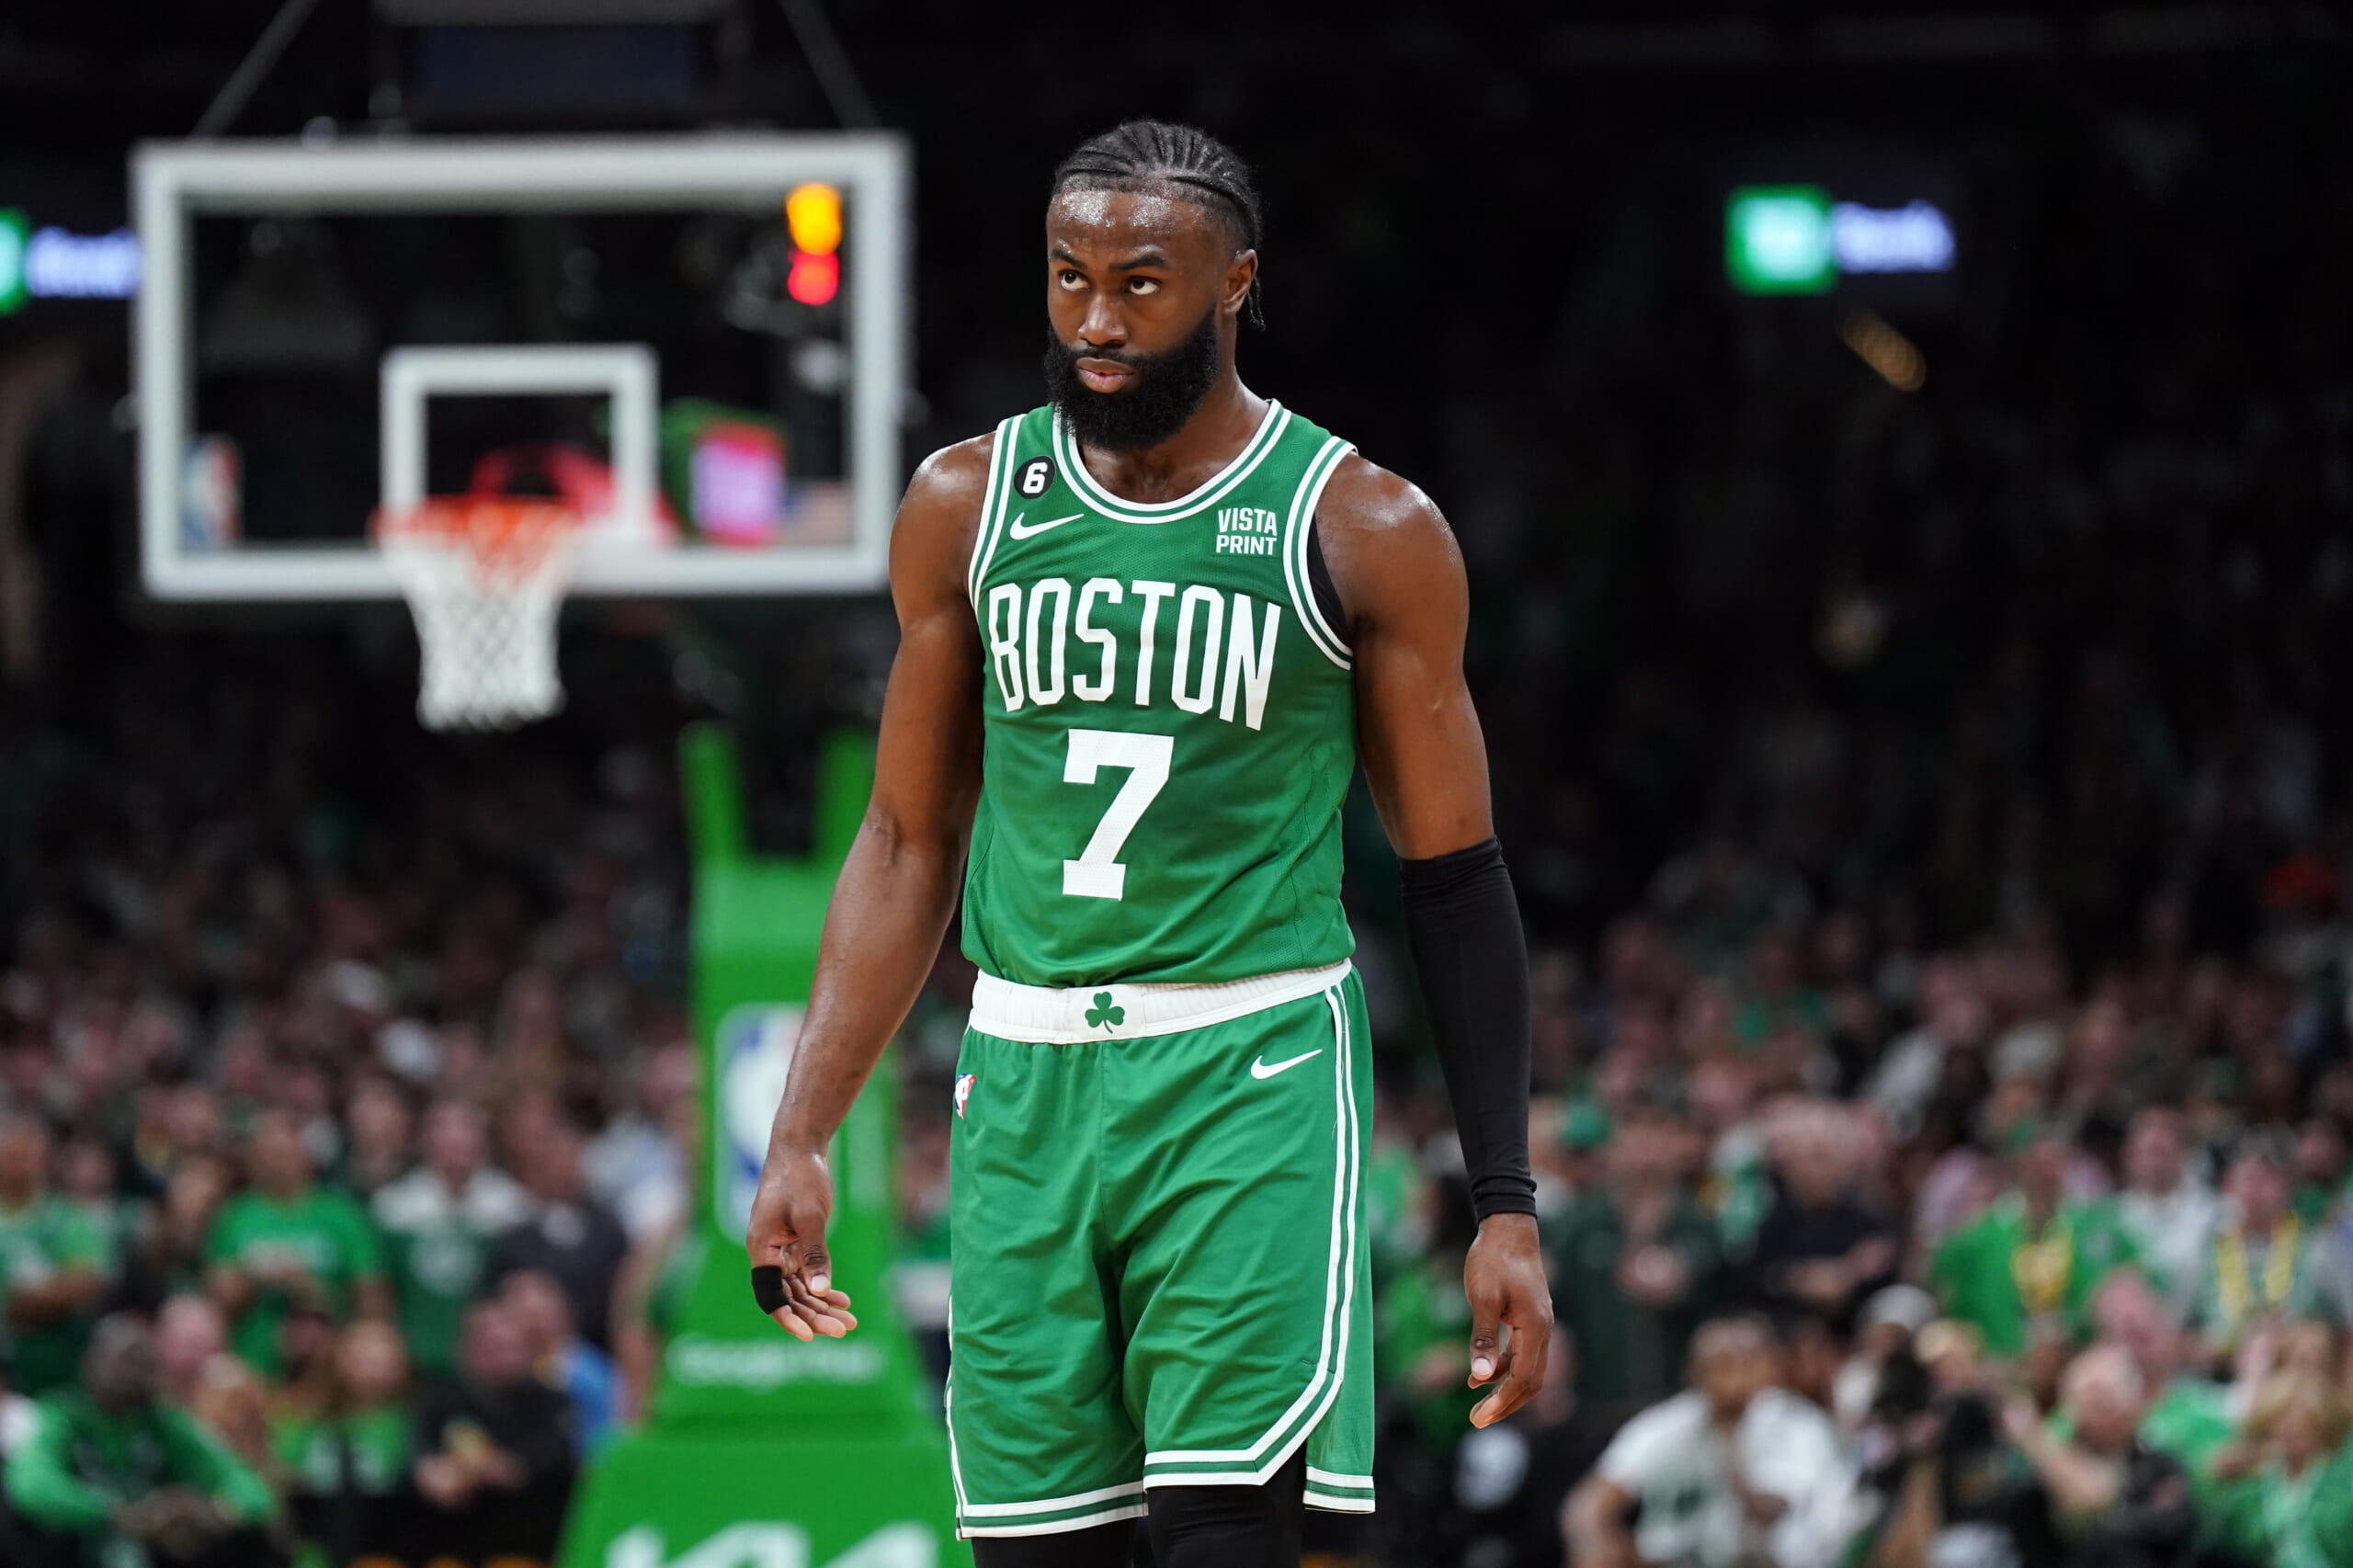 NBA: Playoffs-Miami Heat at Boston Celtics, jaylen brown, knicks